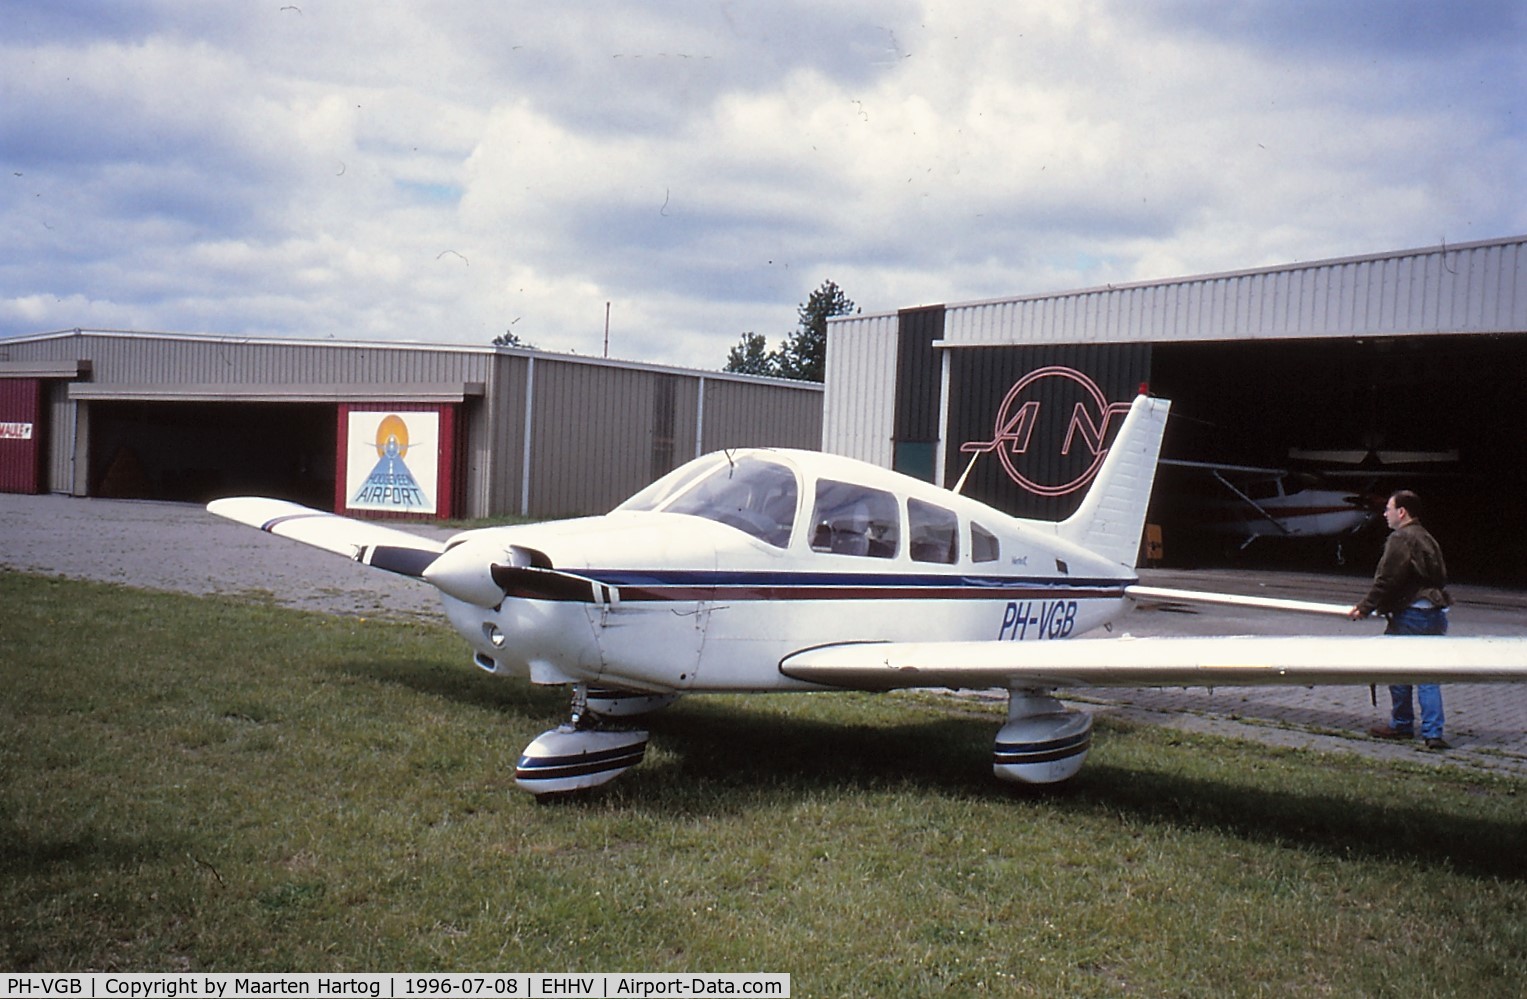 PH-VGB, Piper PA-28-161 C/N 28-8616003, preflight at Aero Noord for a local flight.